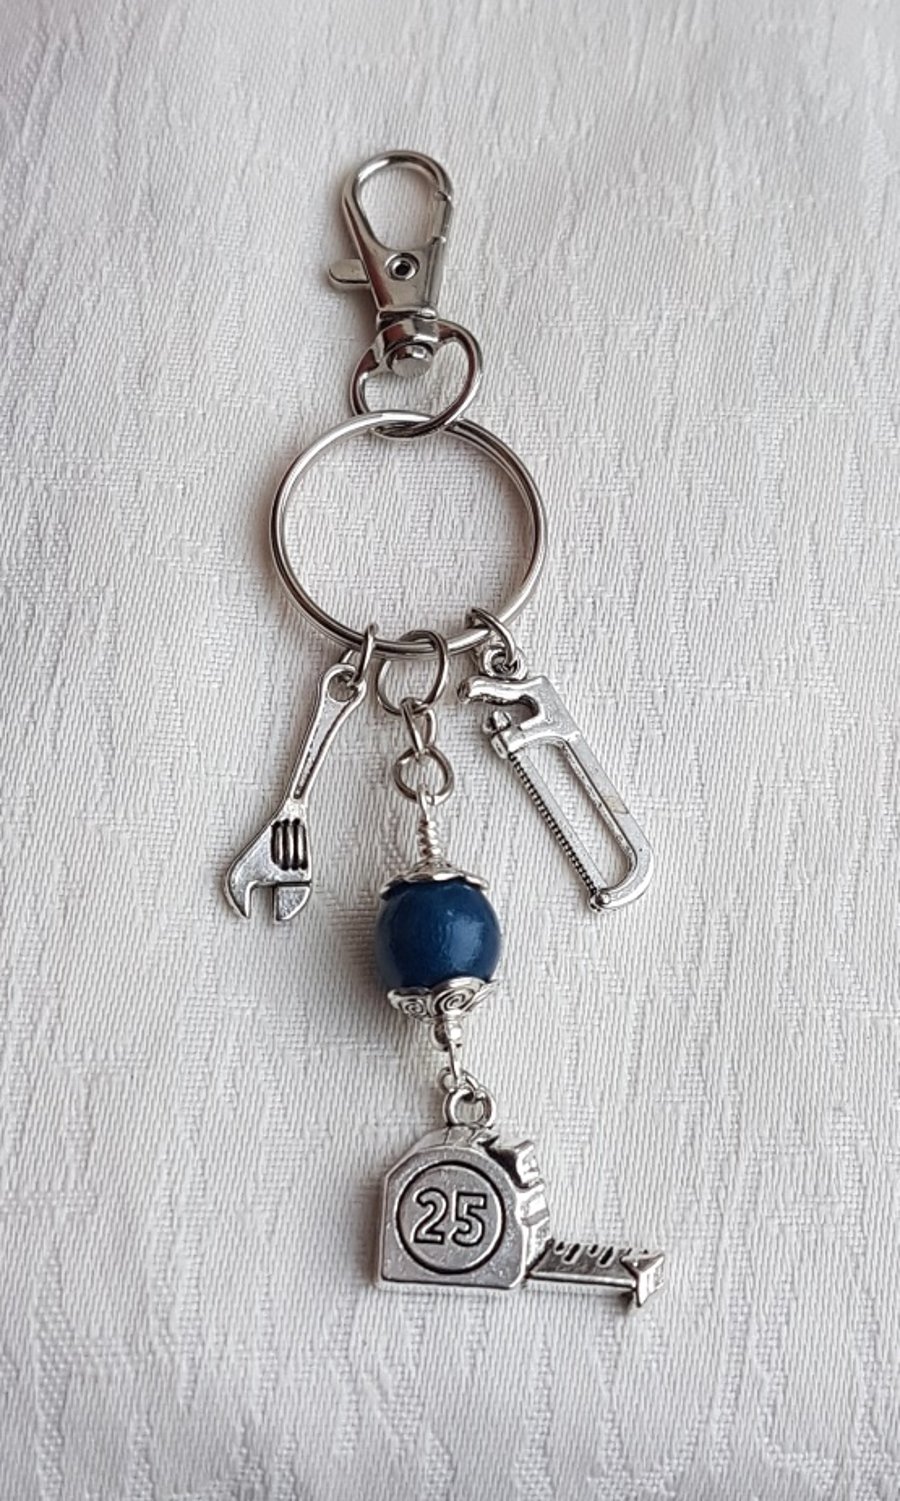 Cool Tools Key Ring No4 - Key Chain - Bag Charm - Blue Wooden Bead.